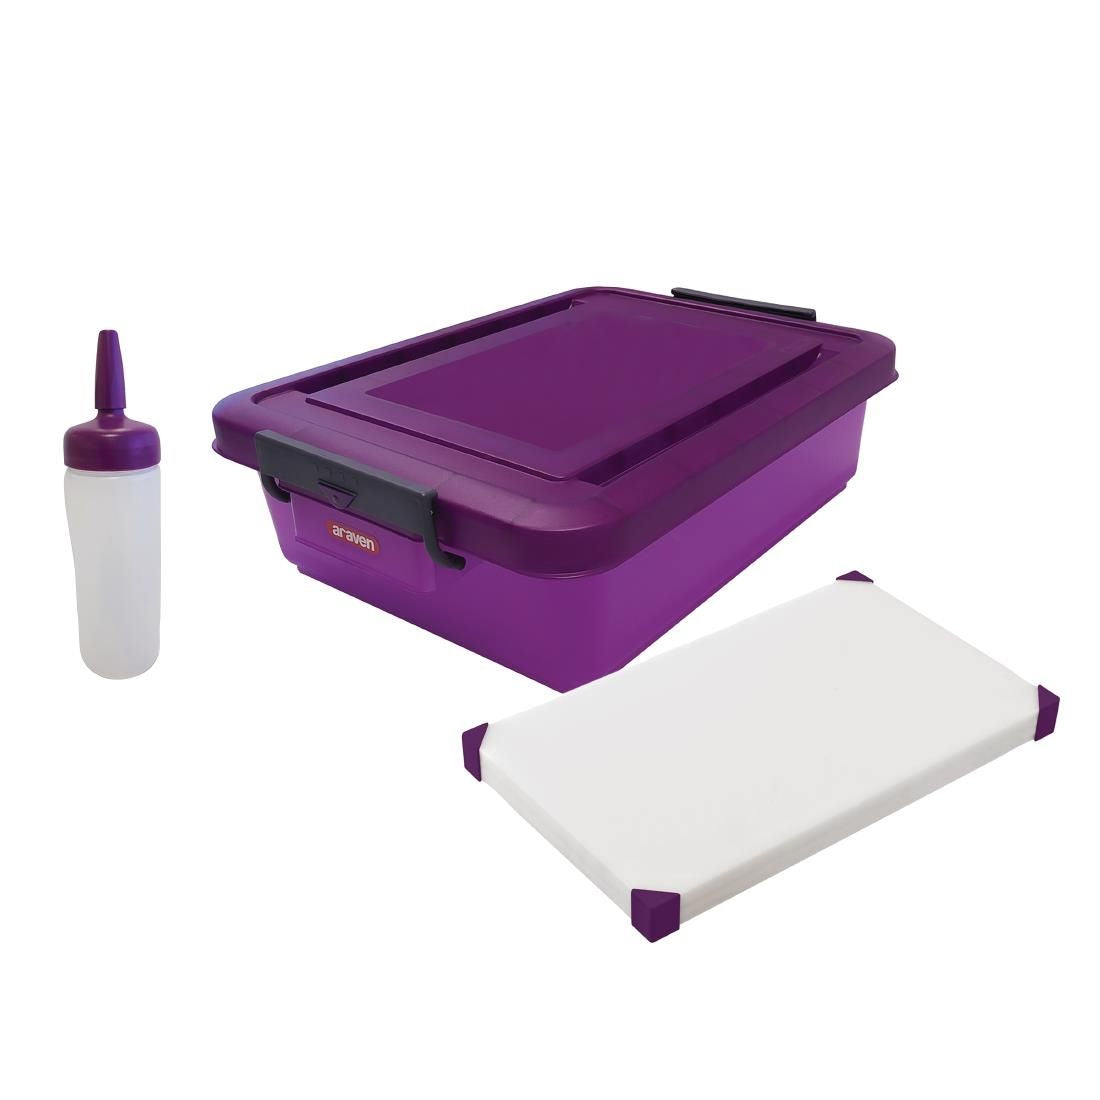 FP934 Araven Anti-Allergic Food Prep Kit Purple JD Catering Equipment Solutions Ltd